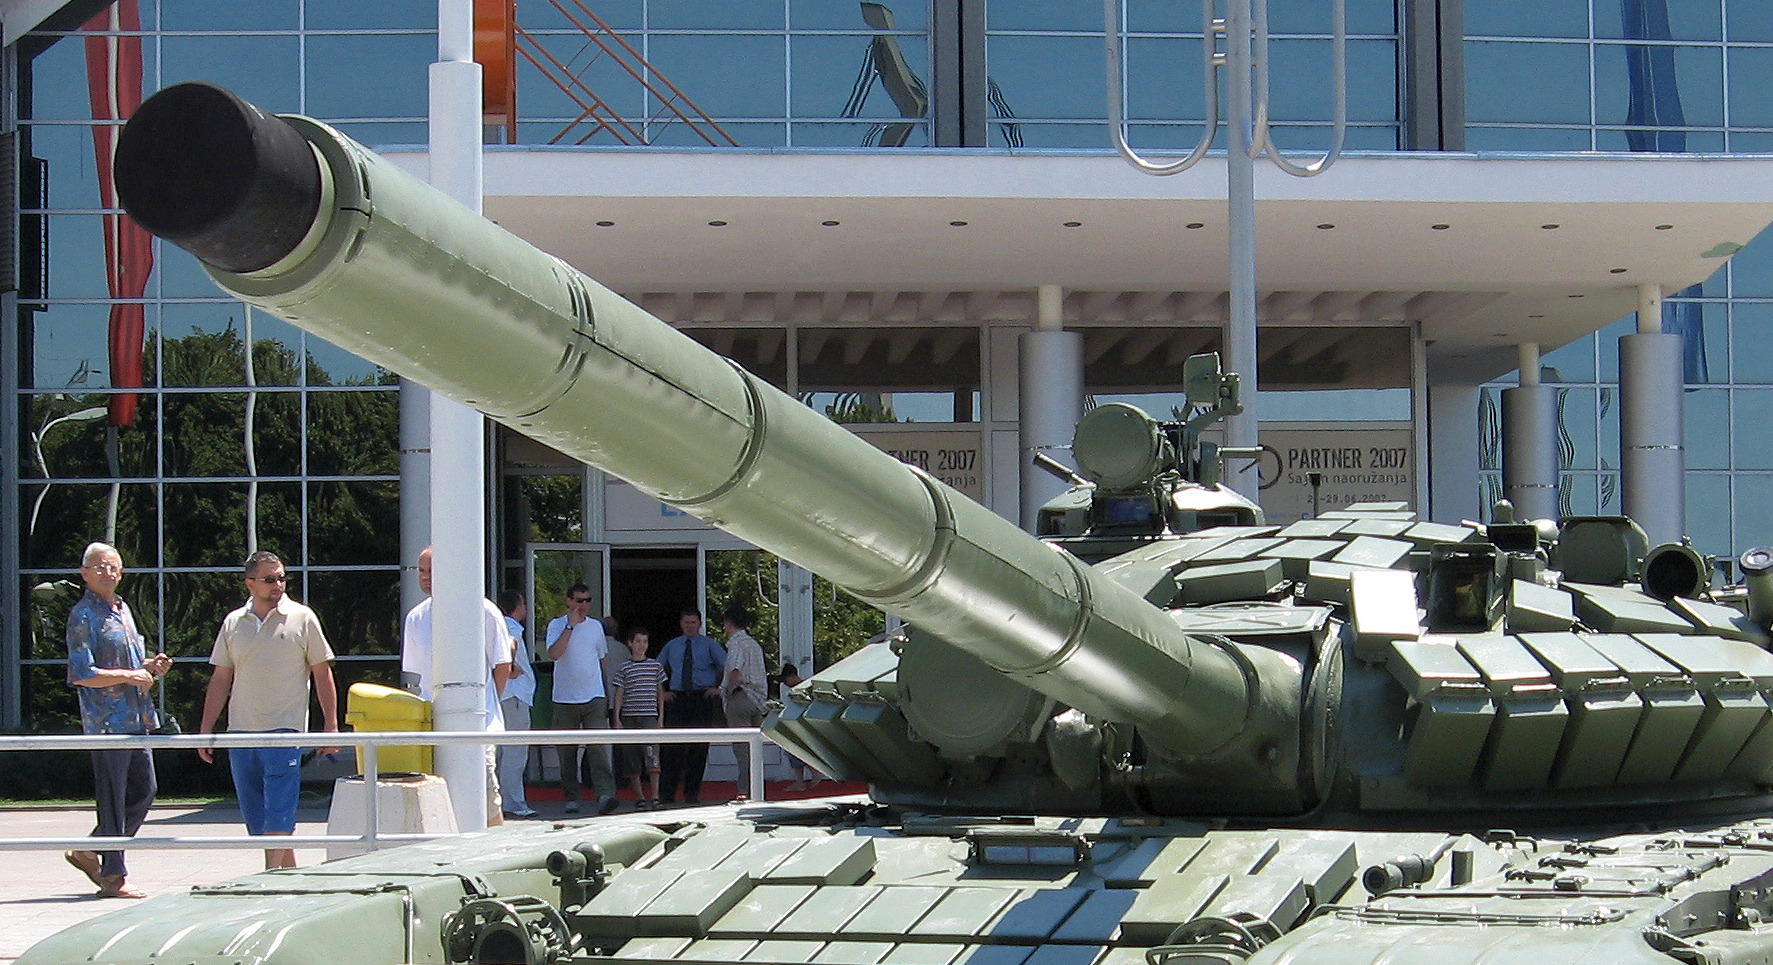 25 mm 2A46M tank gun installed in a Serbian Yugoimport (SDPR) T-72 upgrade proposal, c. 2007